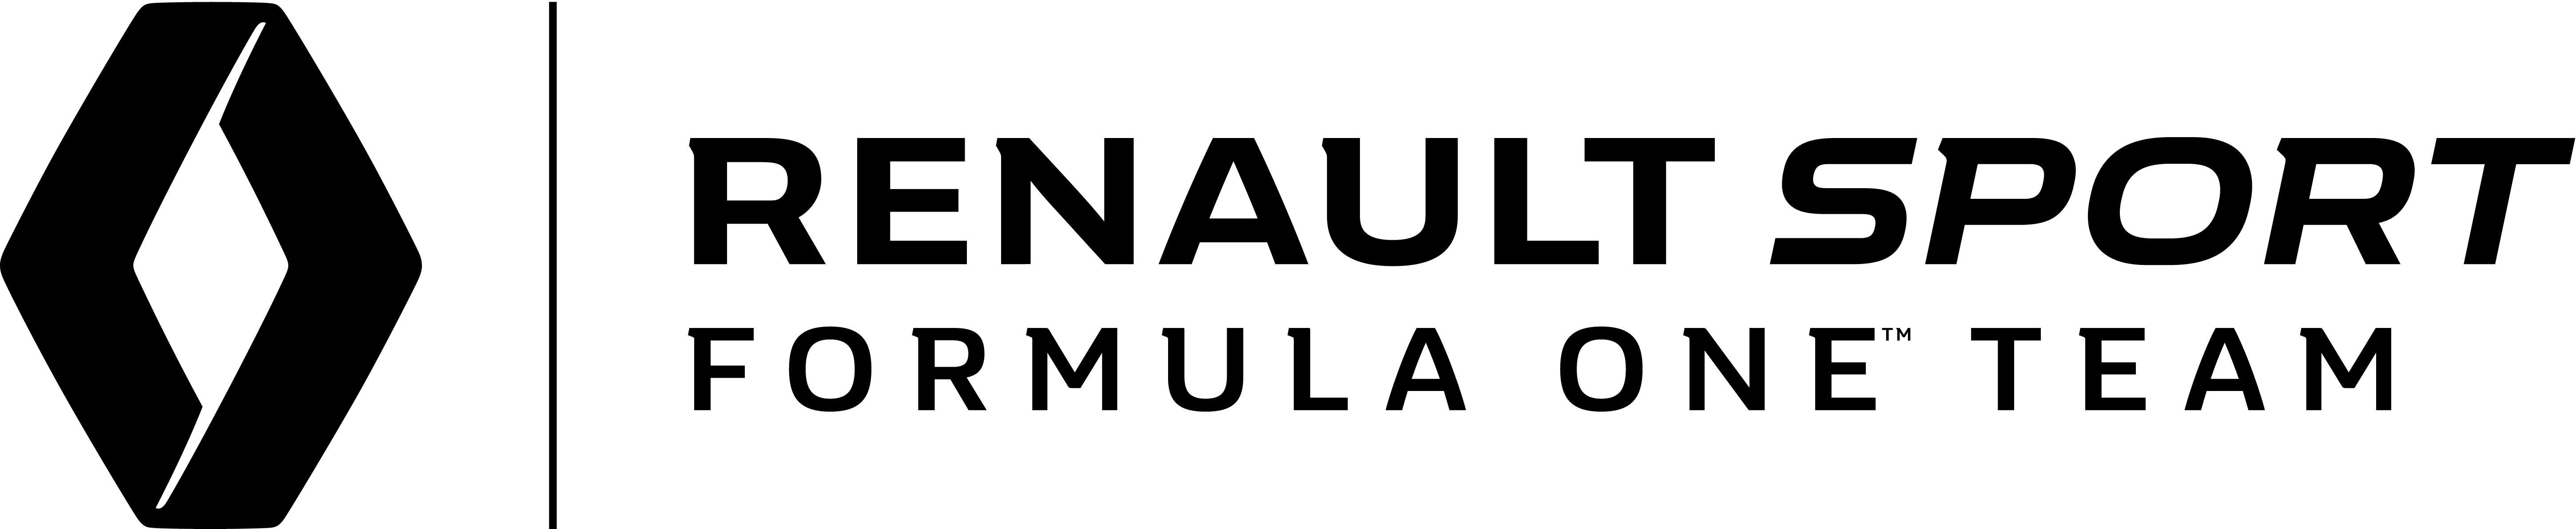 Renault F1 2018 Logo - Βαθμολογίες | F1 2018 by 4T